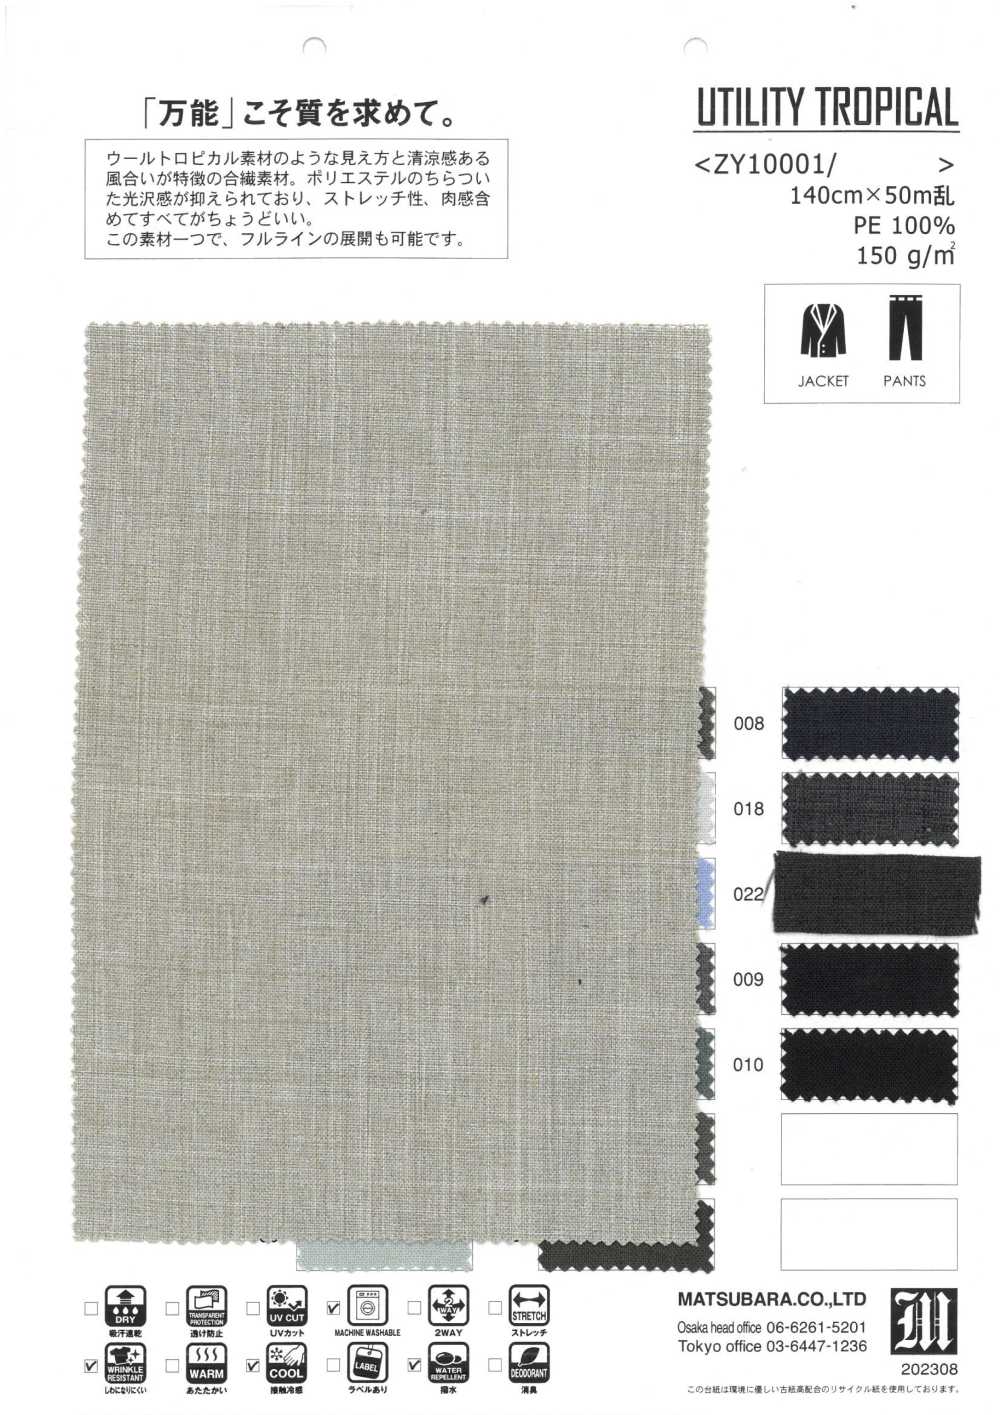 ZY10001 UTILITY TROPICAL[Textilgewebe] Matsubara